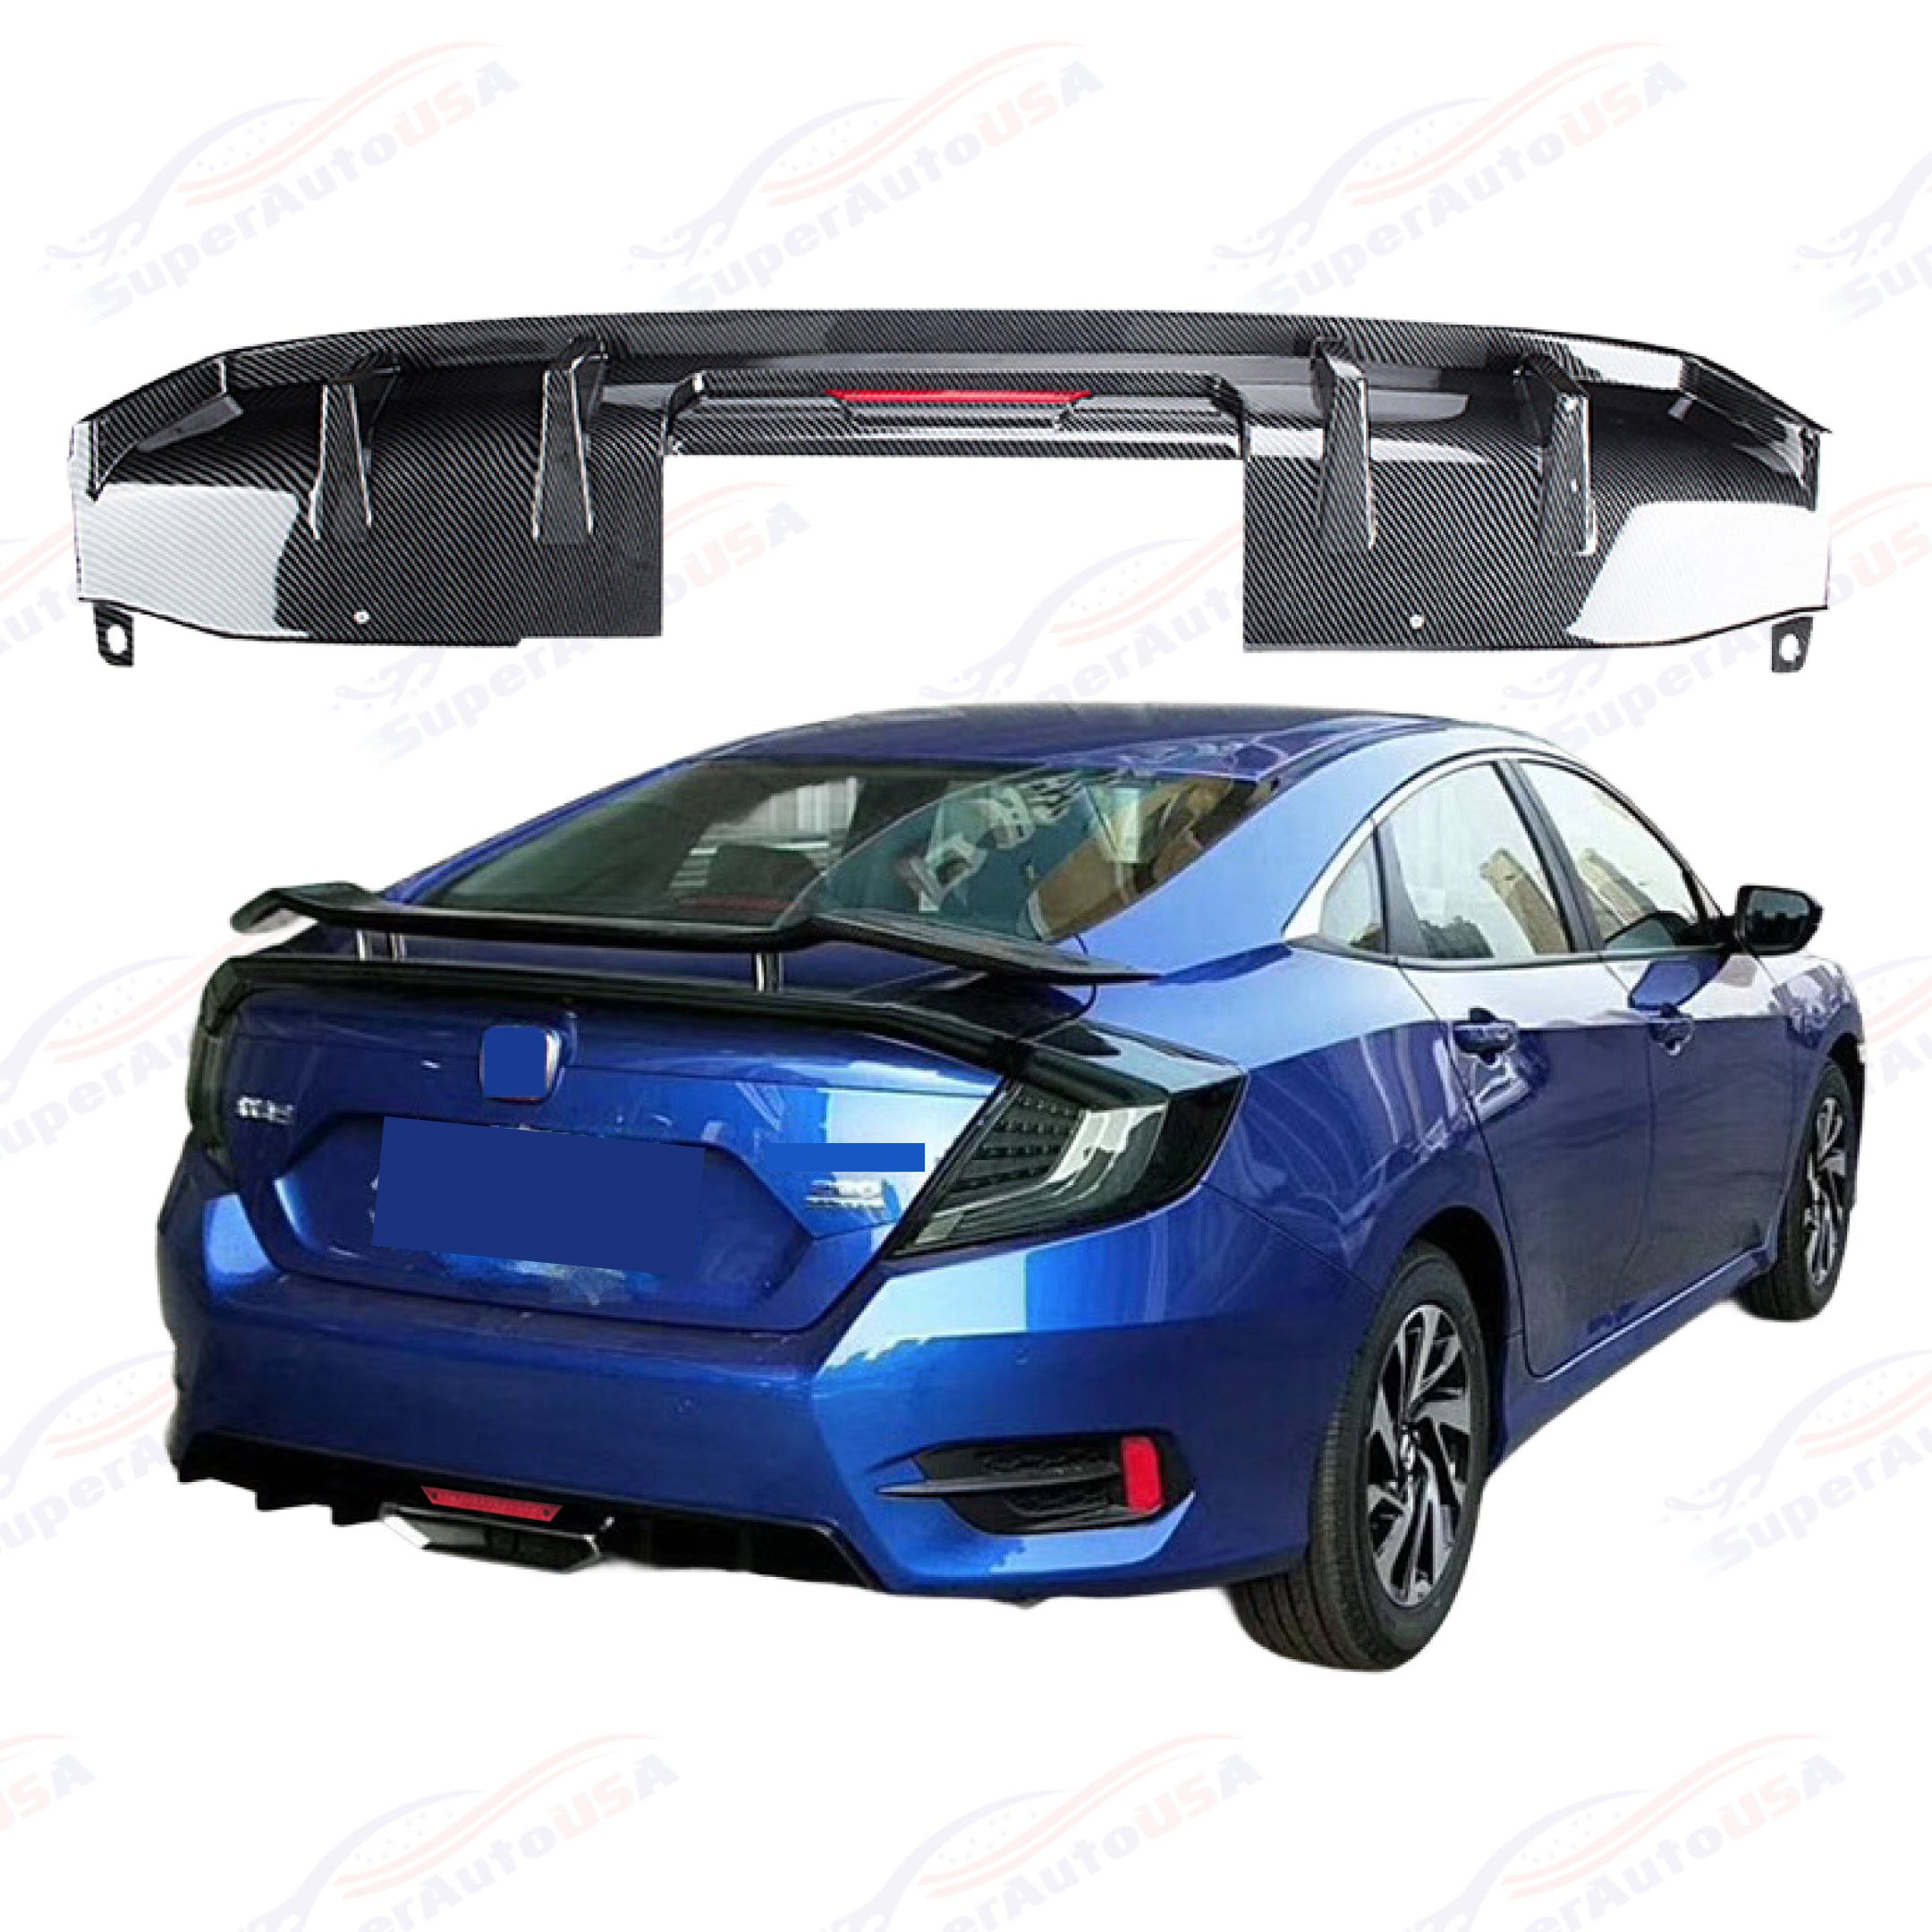 Rear Diffuser & Rear Corners - LED Light  | Fits Honda Civic ( 16-21 )